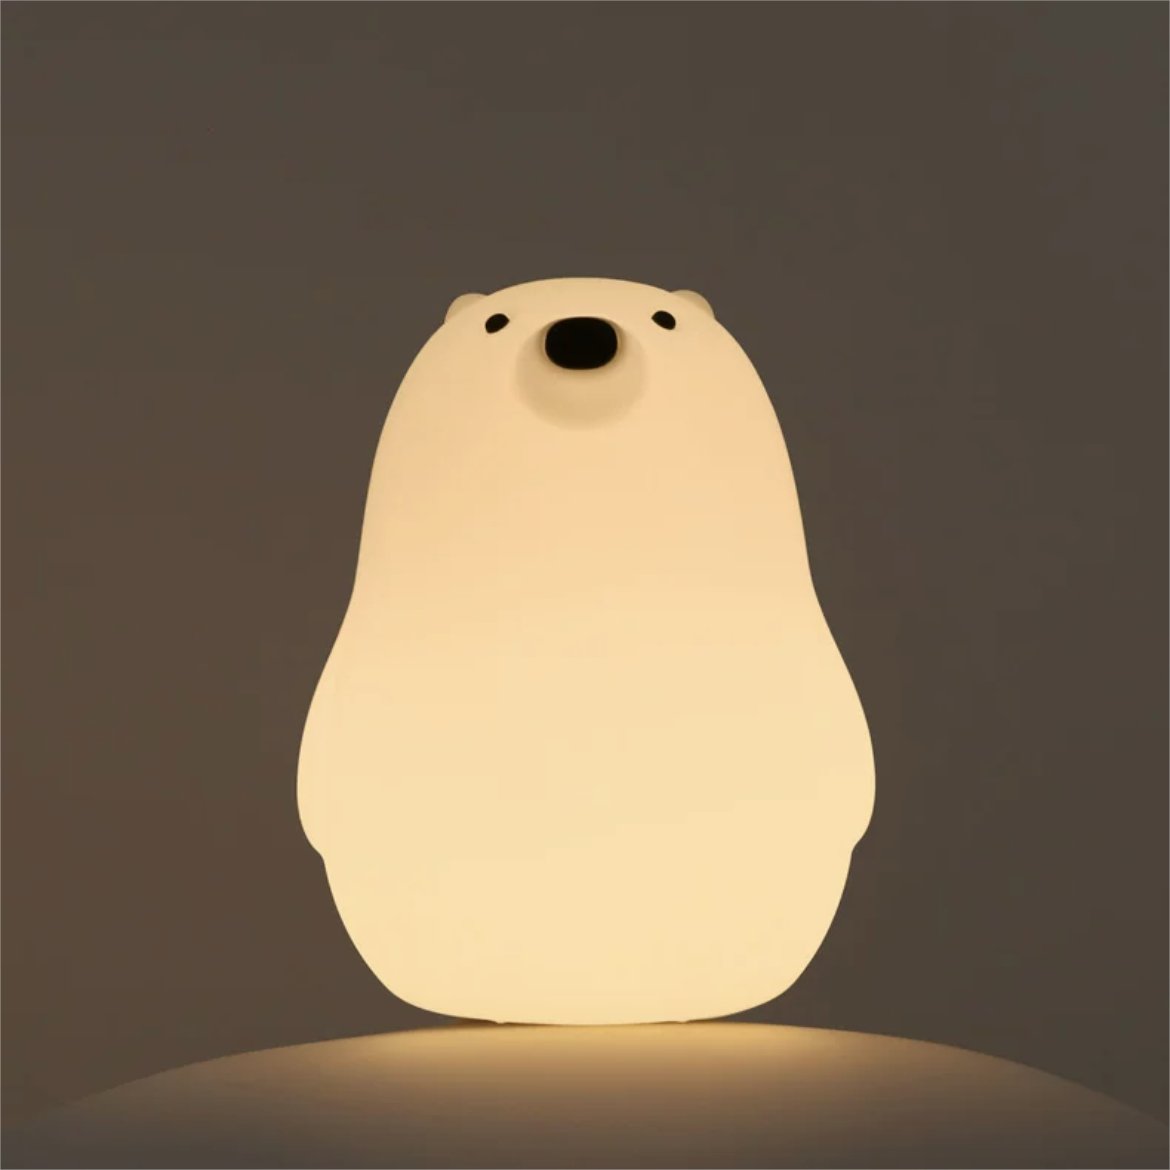 Bear Silicone Pat Control Lamp - Gentle Sleep Companion with Soft Glow